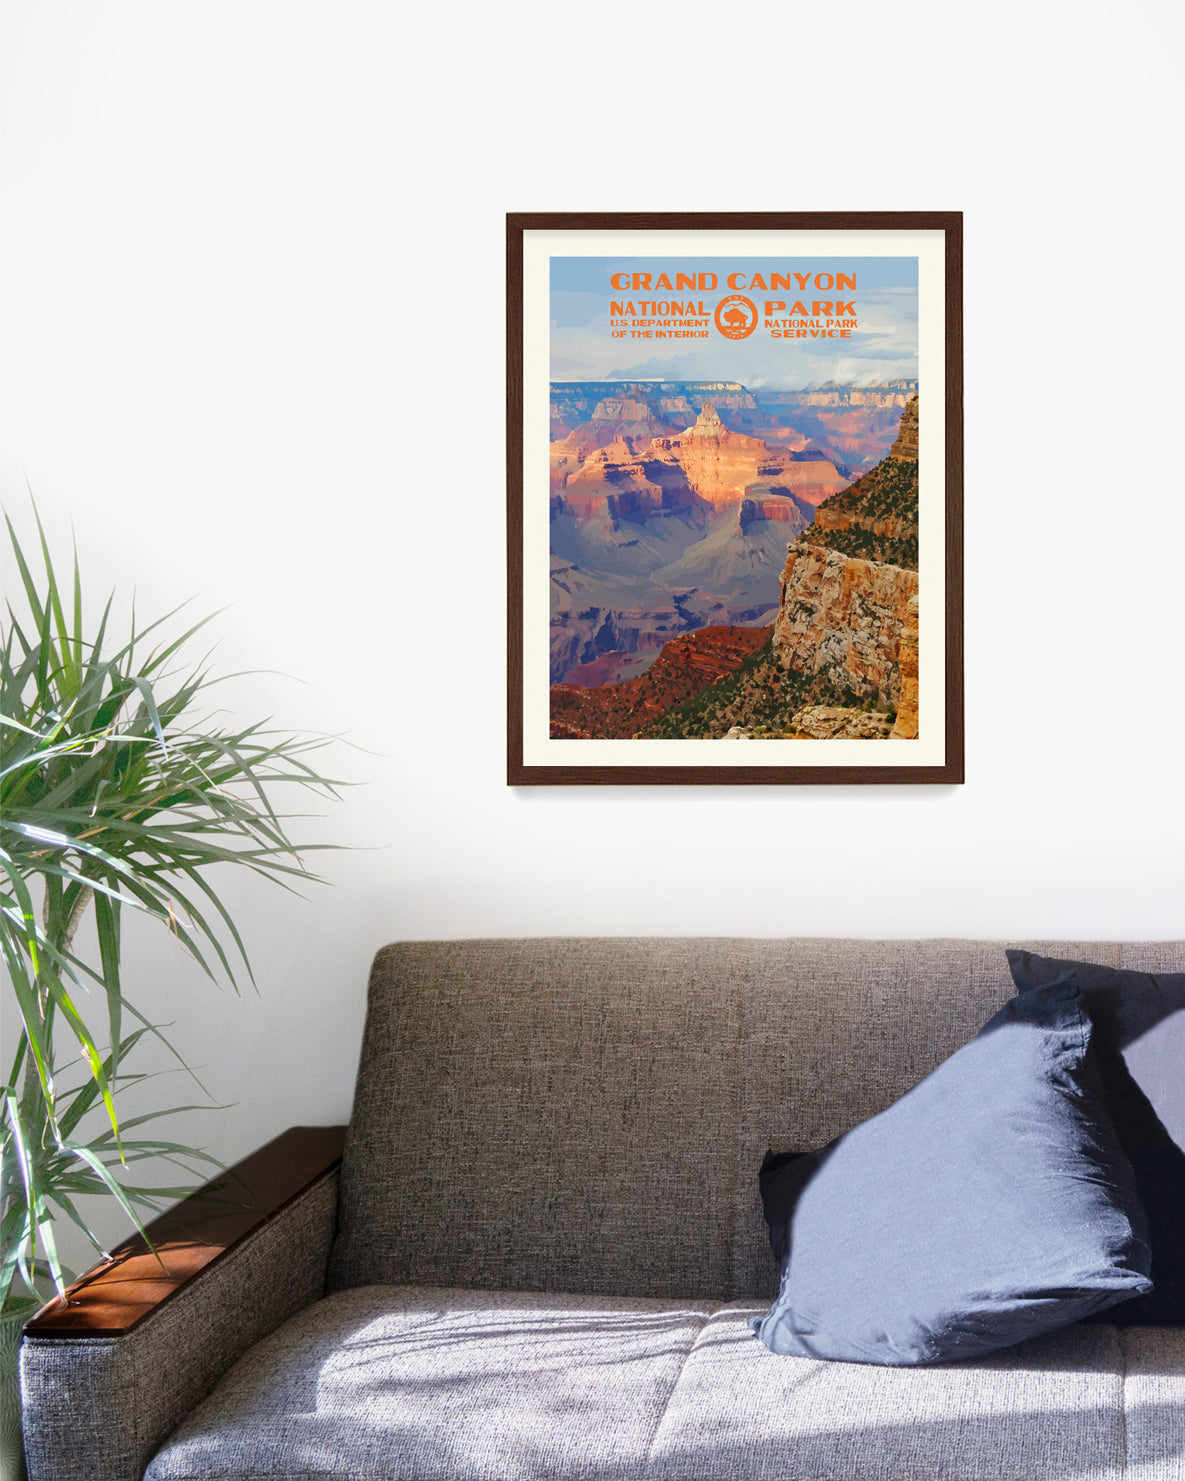 Grand Canyon National Park Poster, National Park Wall Art